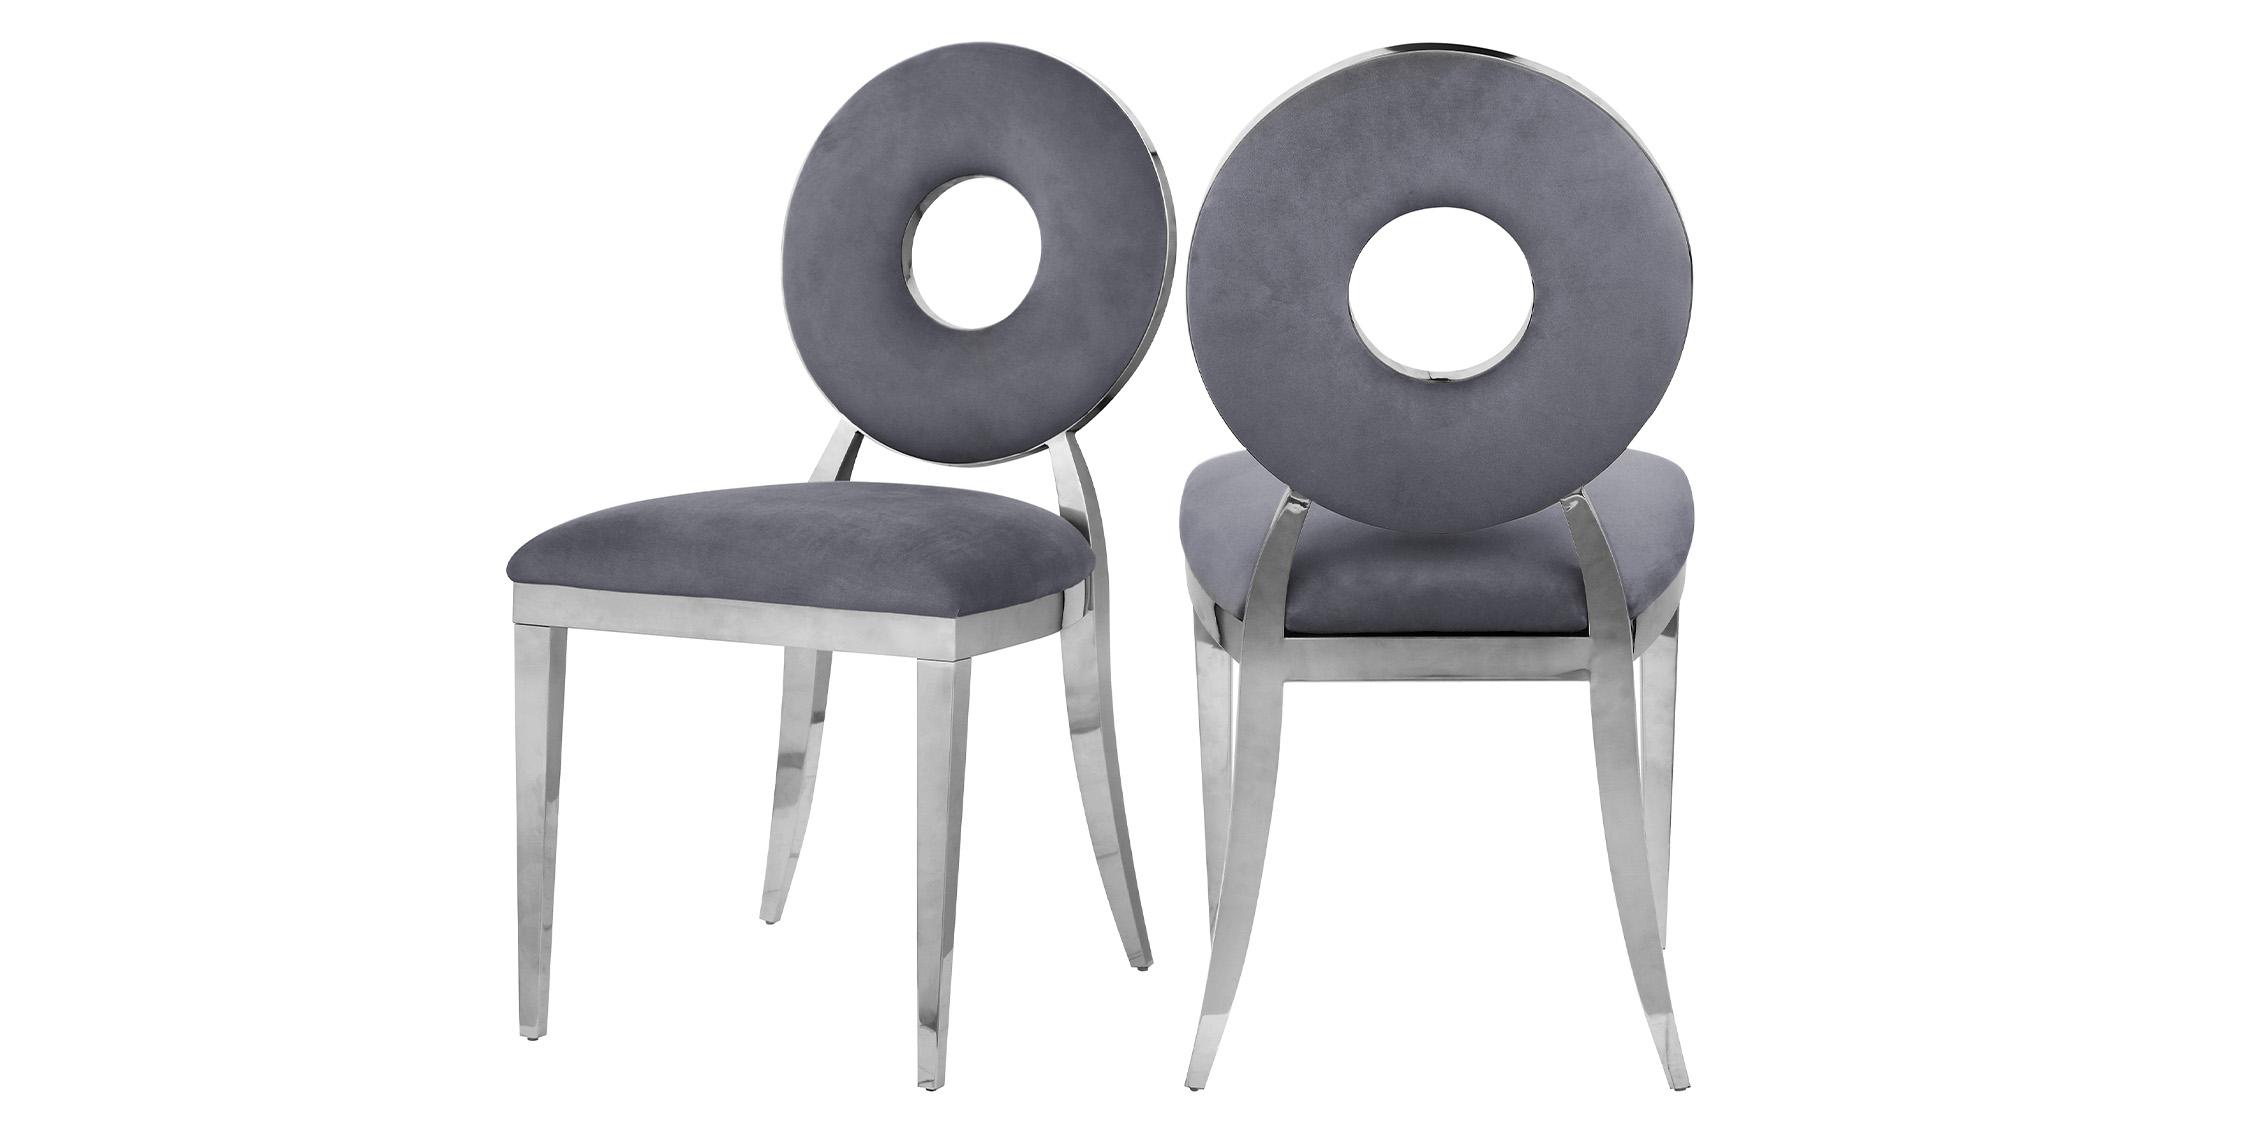 Contemporary Dining Chair Set CAROUSEL 859Grey-C 859Grey-C in Chrome, Gray Velvet